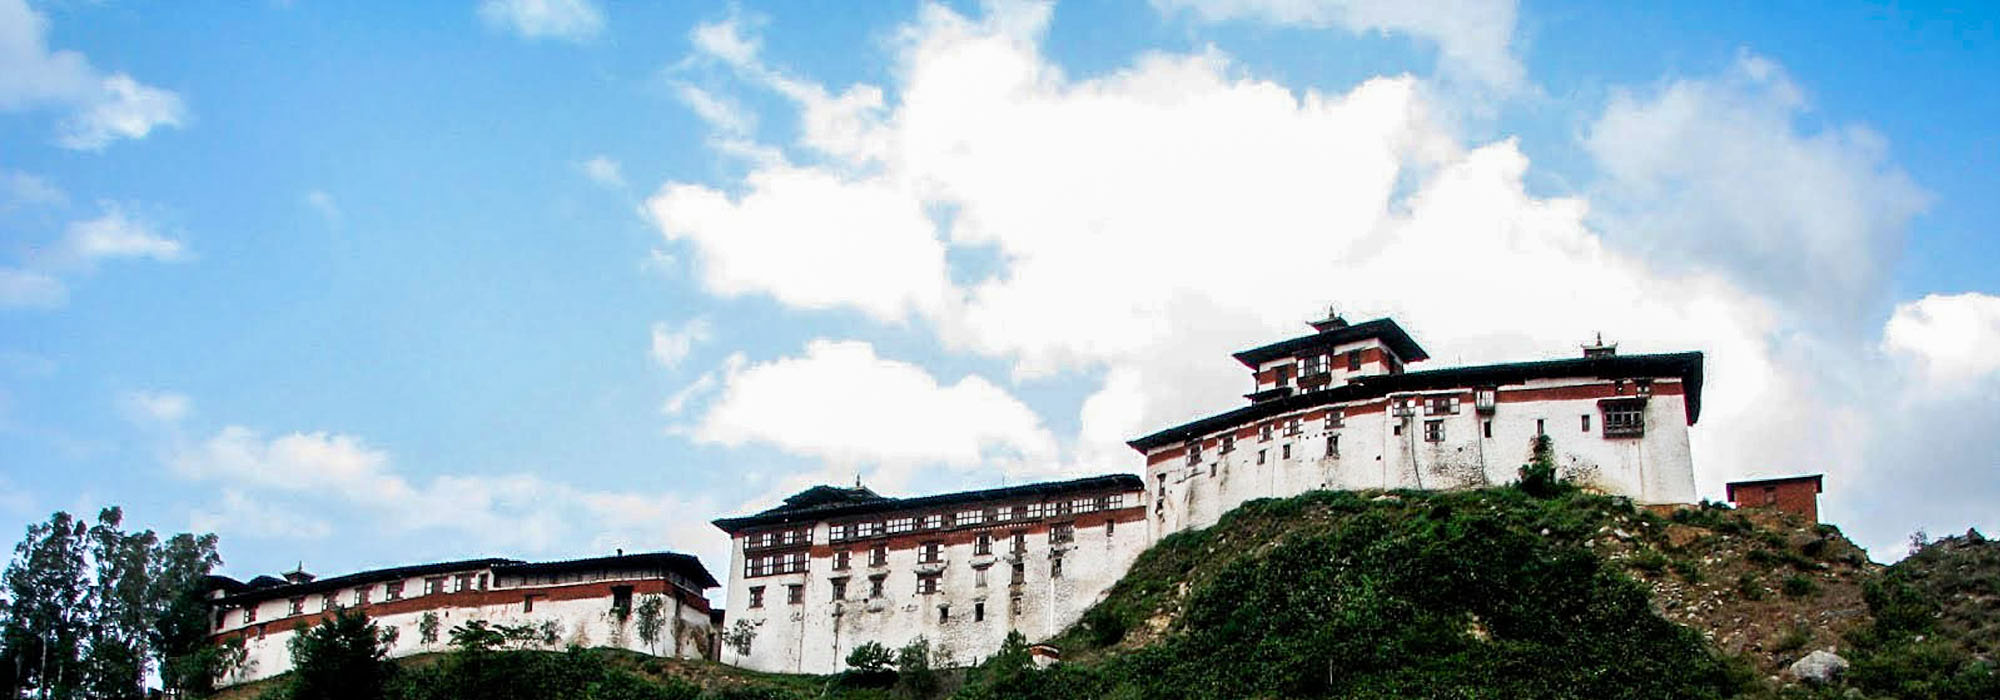 Wangduephodrang Tshechu